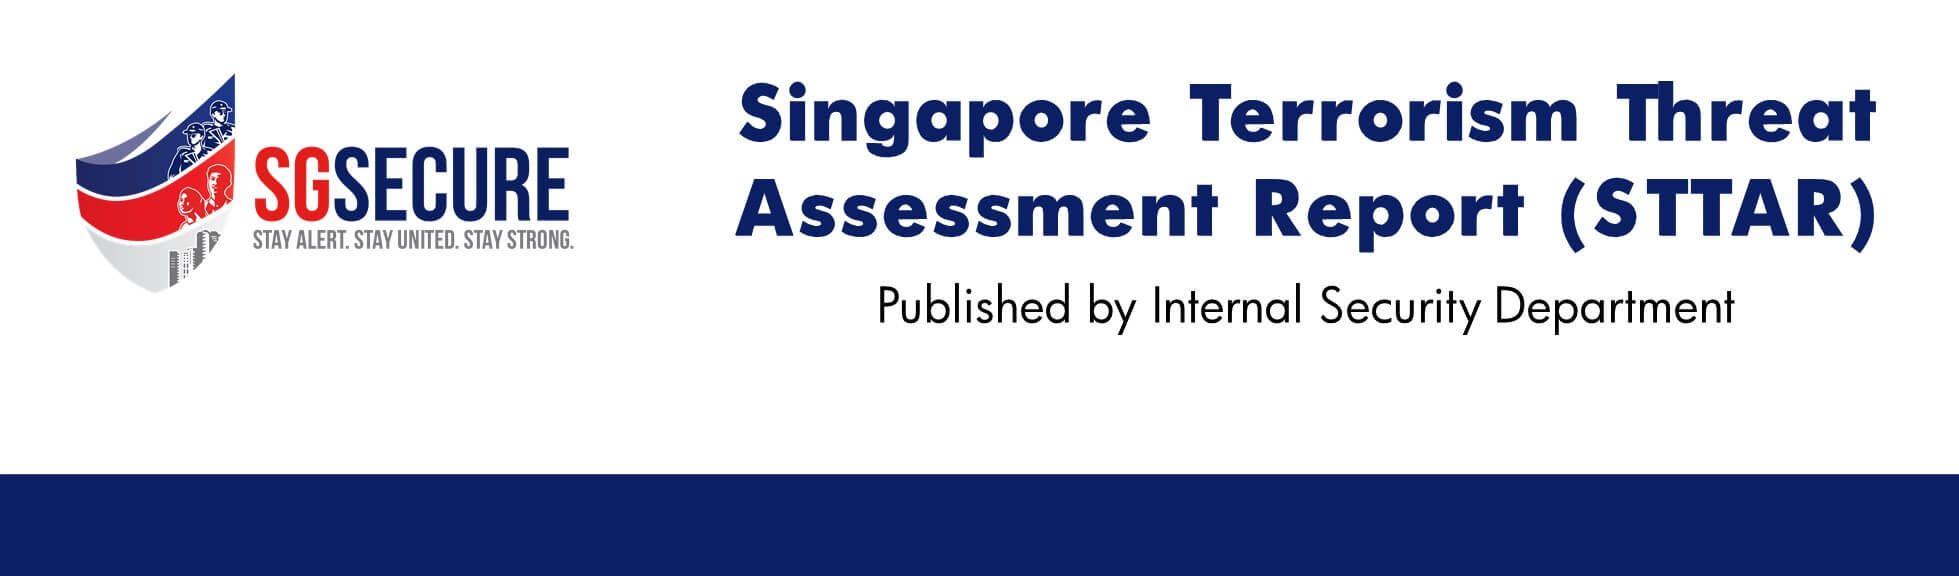 Singapore Terrorism Threat Assessment Report (STTAR)